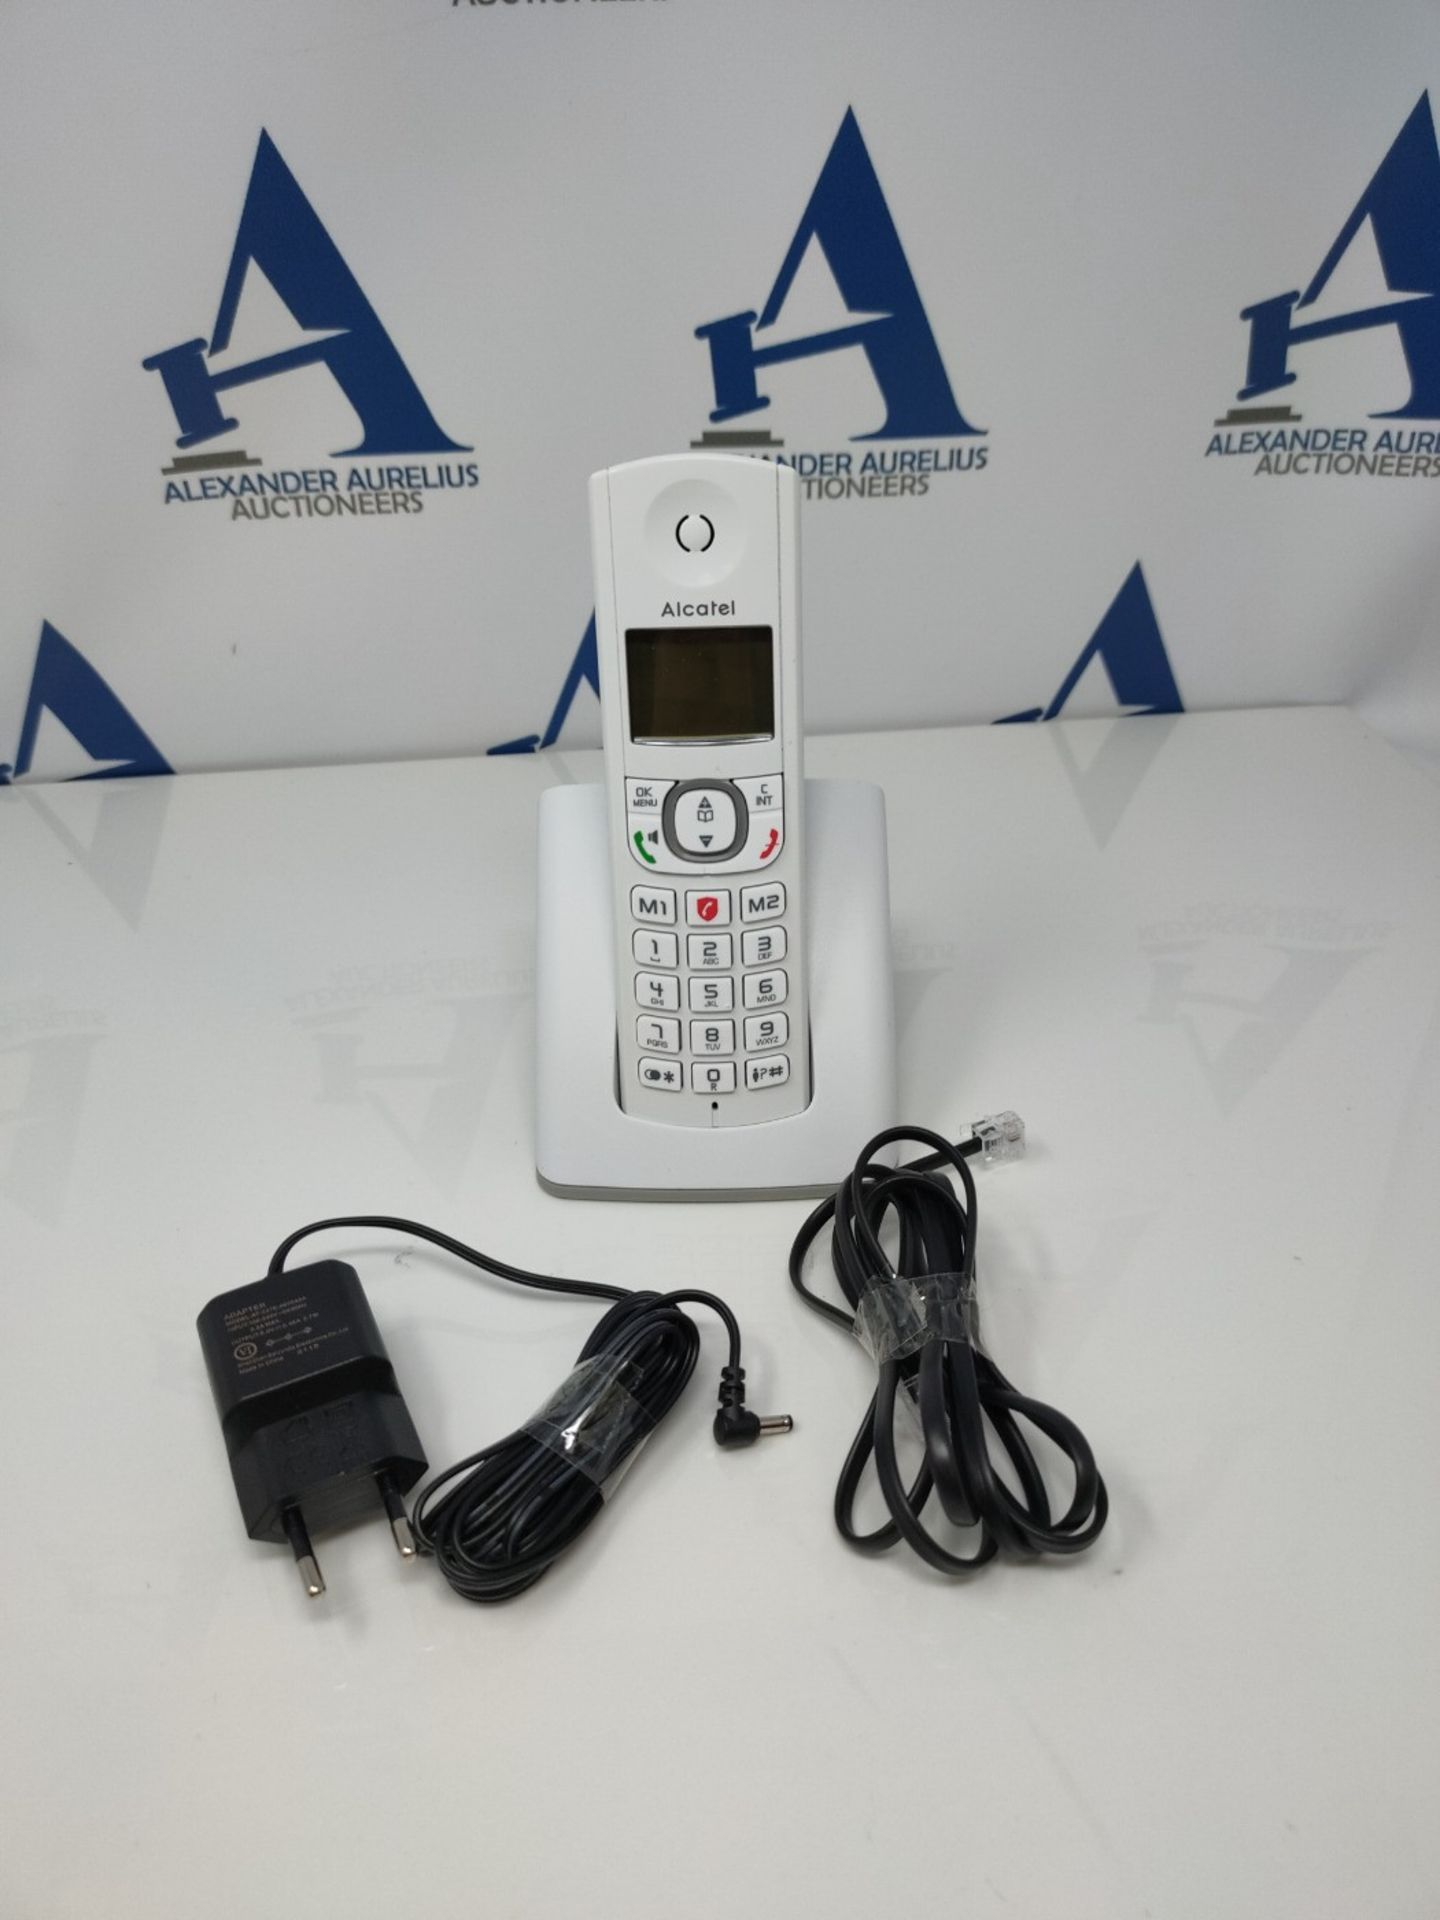 Alcatel F530 - TÃ©lÃ©phone sans fil DECT, Mains libres, Grand Ã©cran rÃ©troÃ? - Image 2 of 2